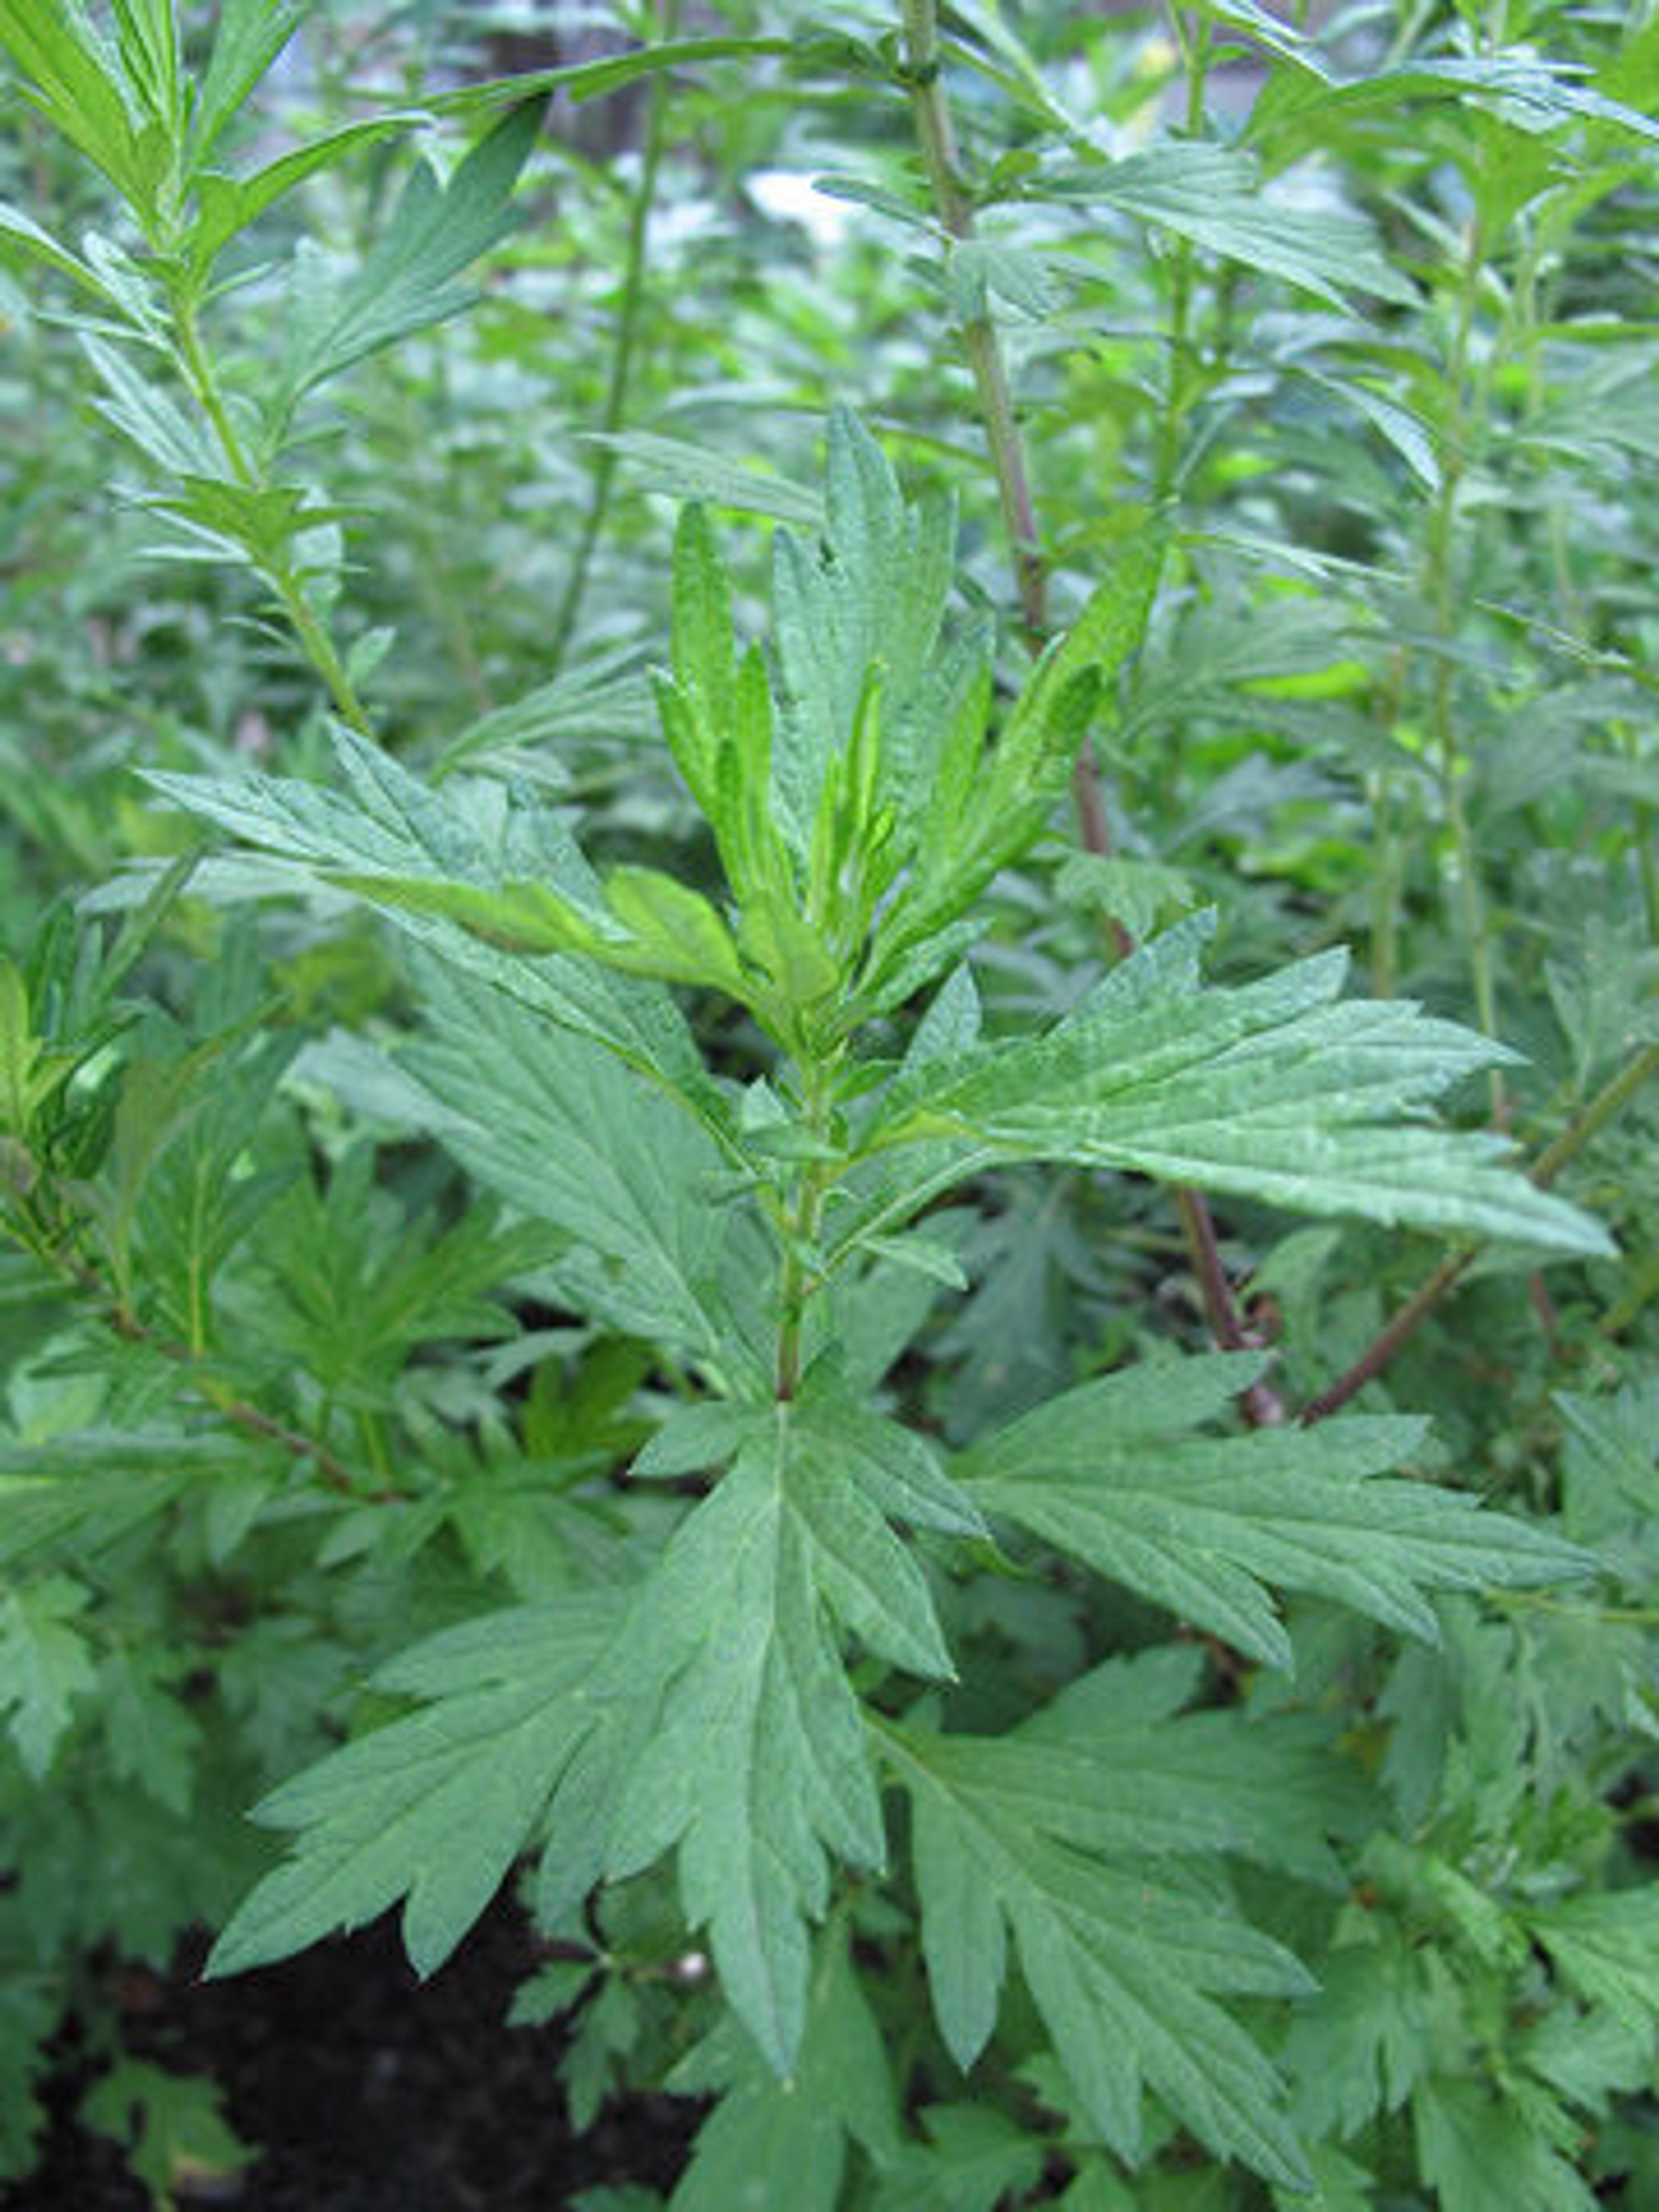 Mugwort (Artemisia vulgaris) grows in Bonnefont Herb Garden